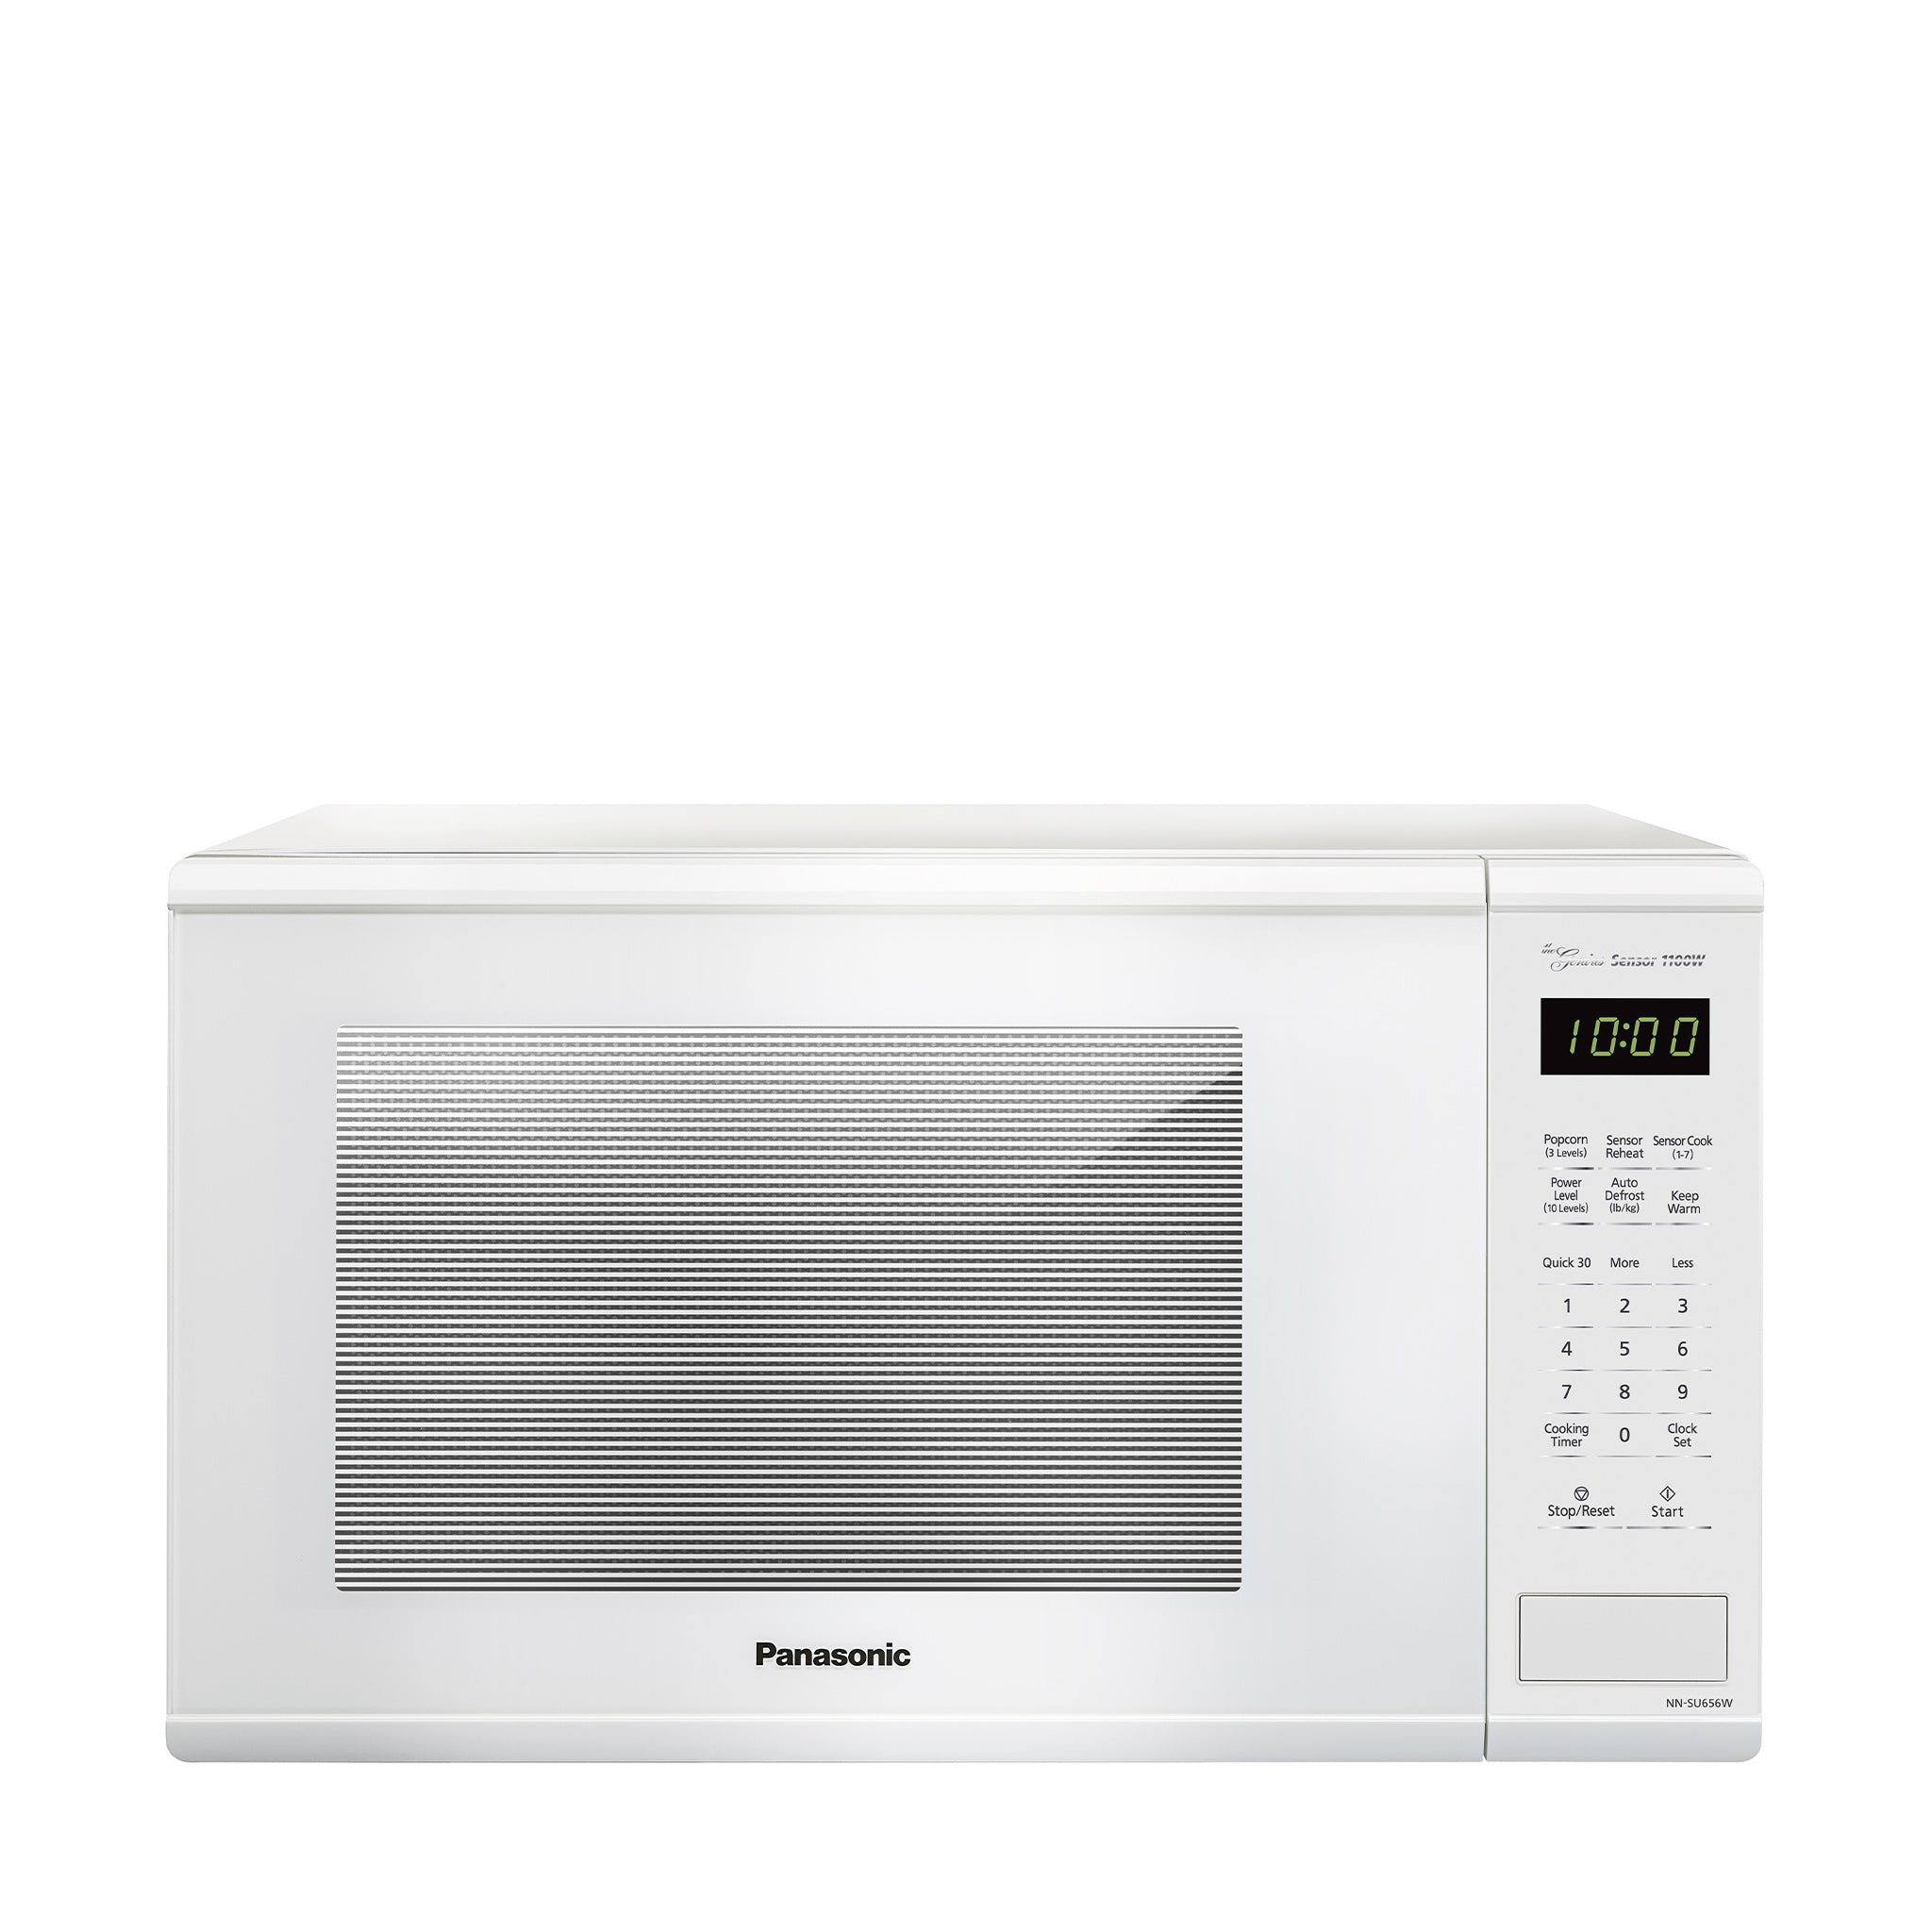 Panasonic White 1.3 Cu. ft. Countertop Microwave Oven - NN-SU656W